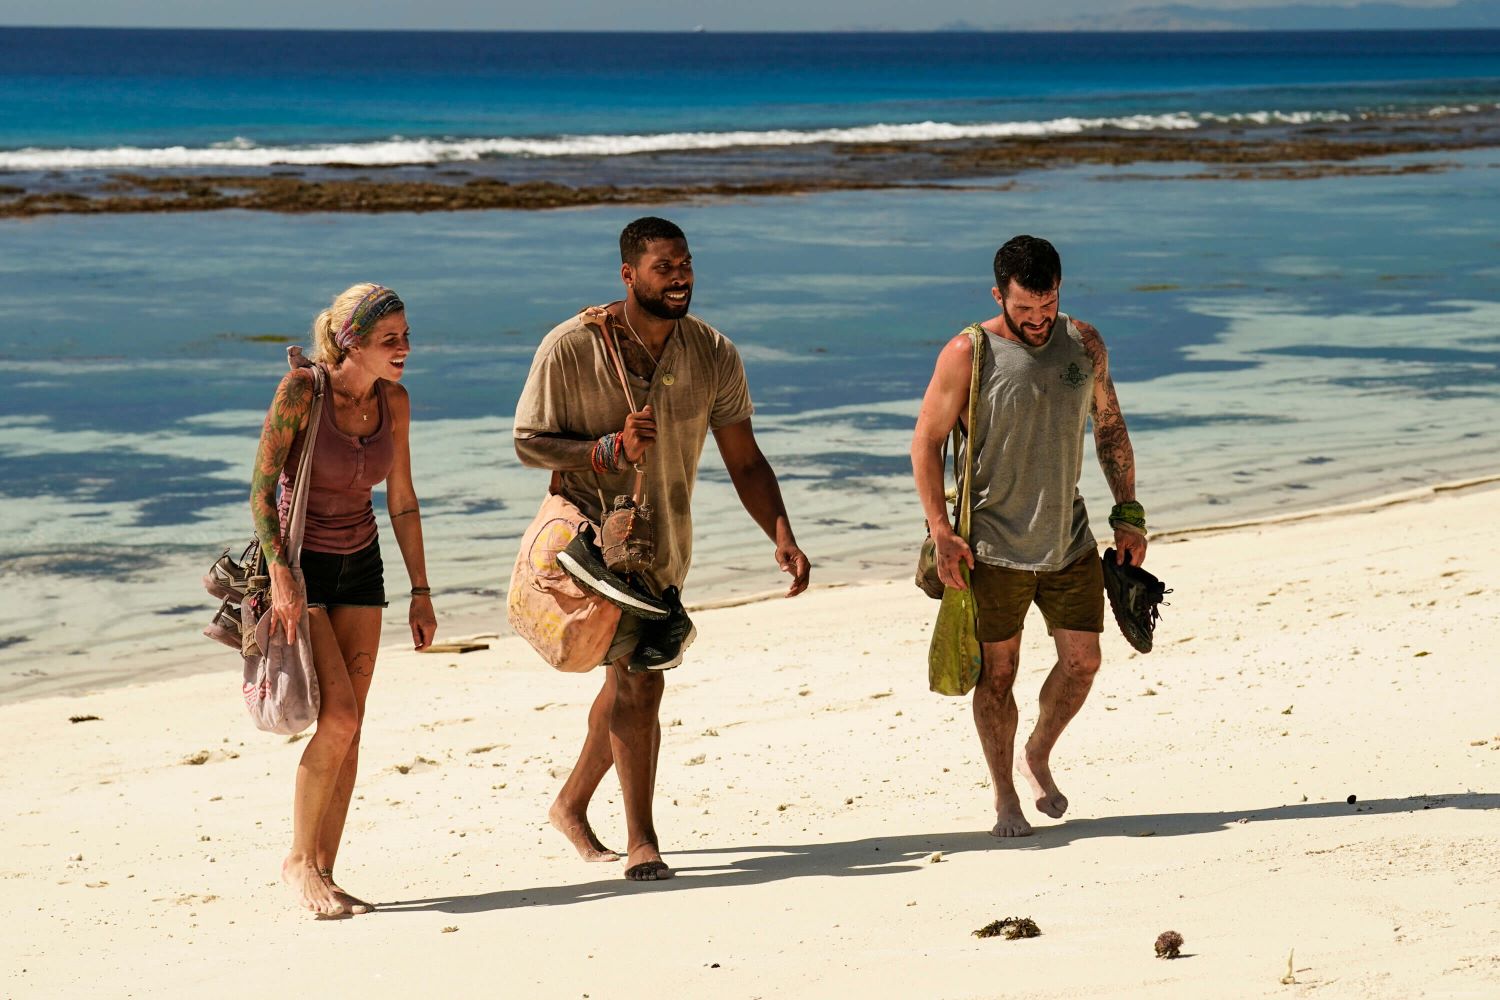 Carolyn Wiger, Brandon Cottom, and Danny Massa walk on the beach in 'Survivor 44' Episode 5 on CBS.